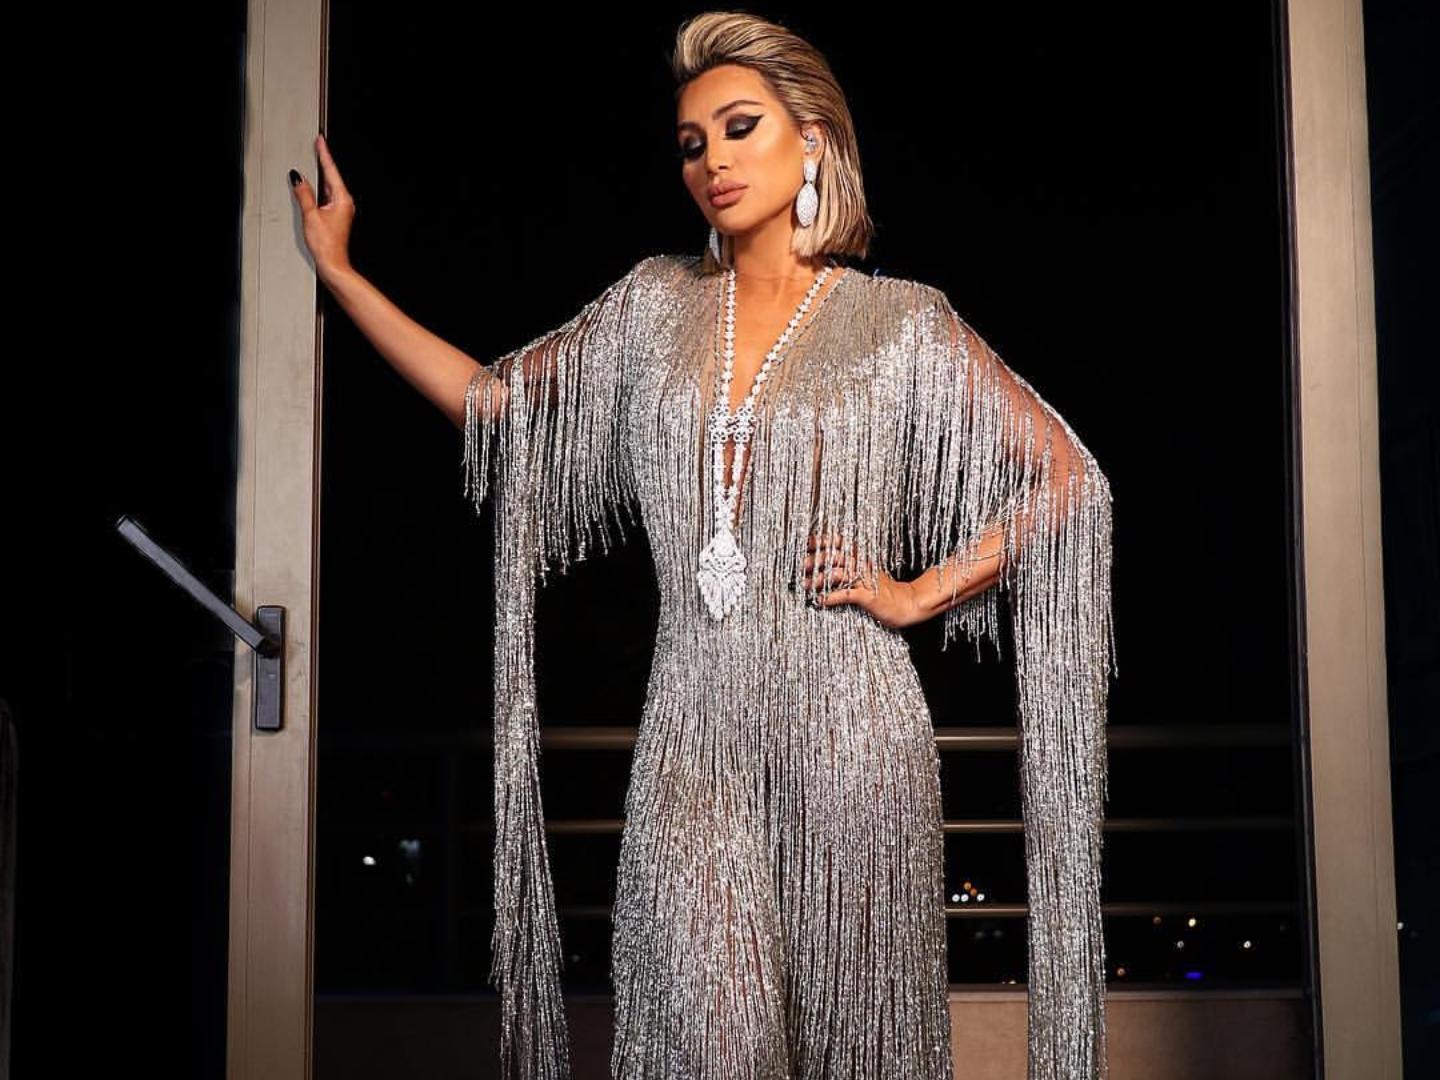 Lebanese Celebrities’ Fashion on New Year’s Eve